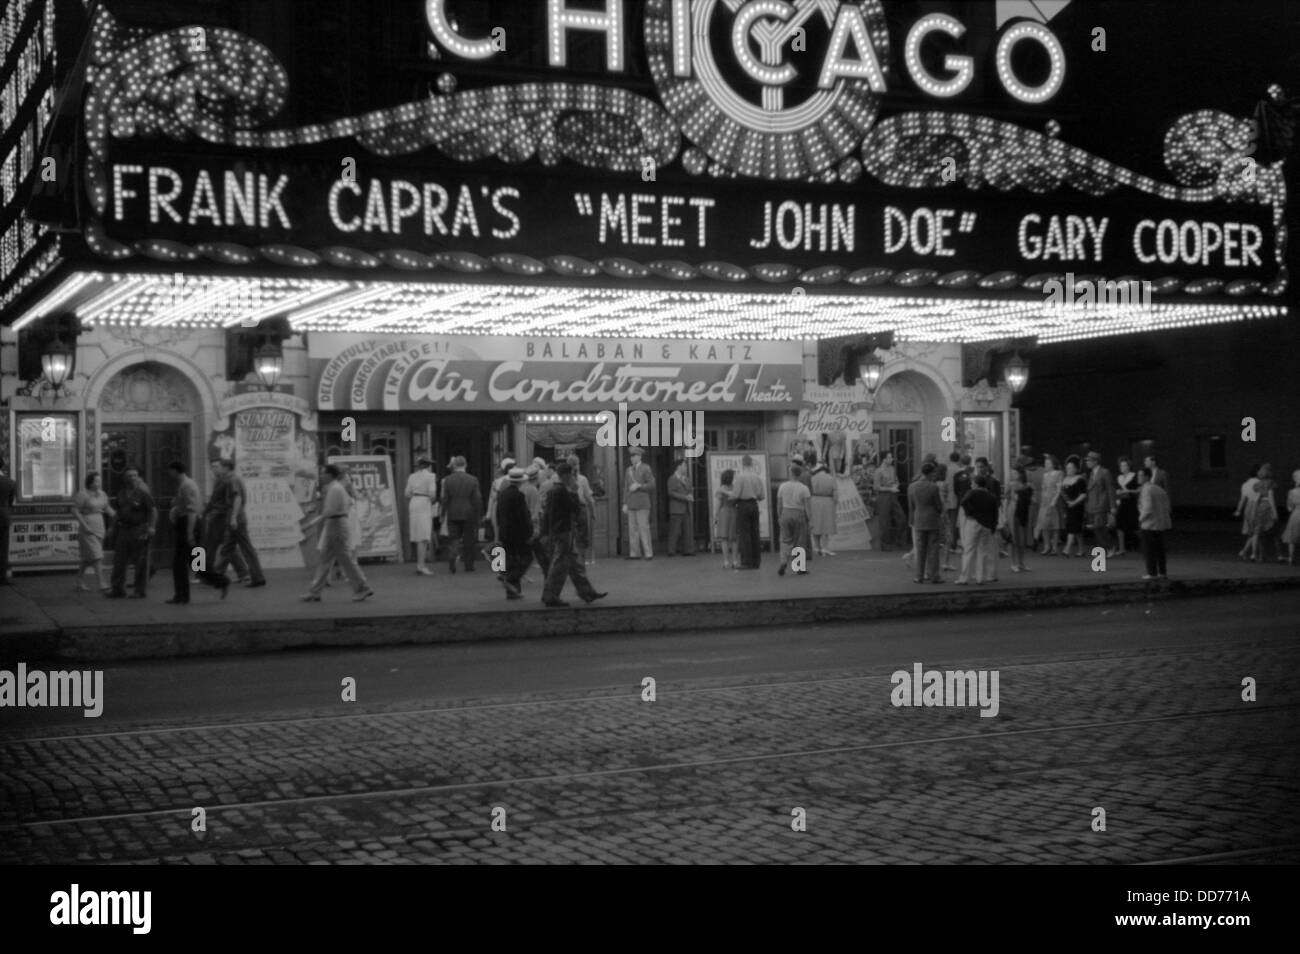 Chicago movie theater showing Frank Capra's, 'Meet John Doe', starring Gary Cooper, July 1941. Photo by John Vachon. Stock Photo